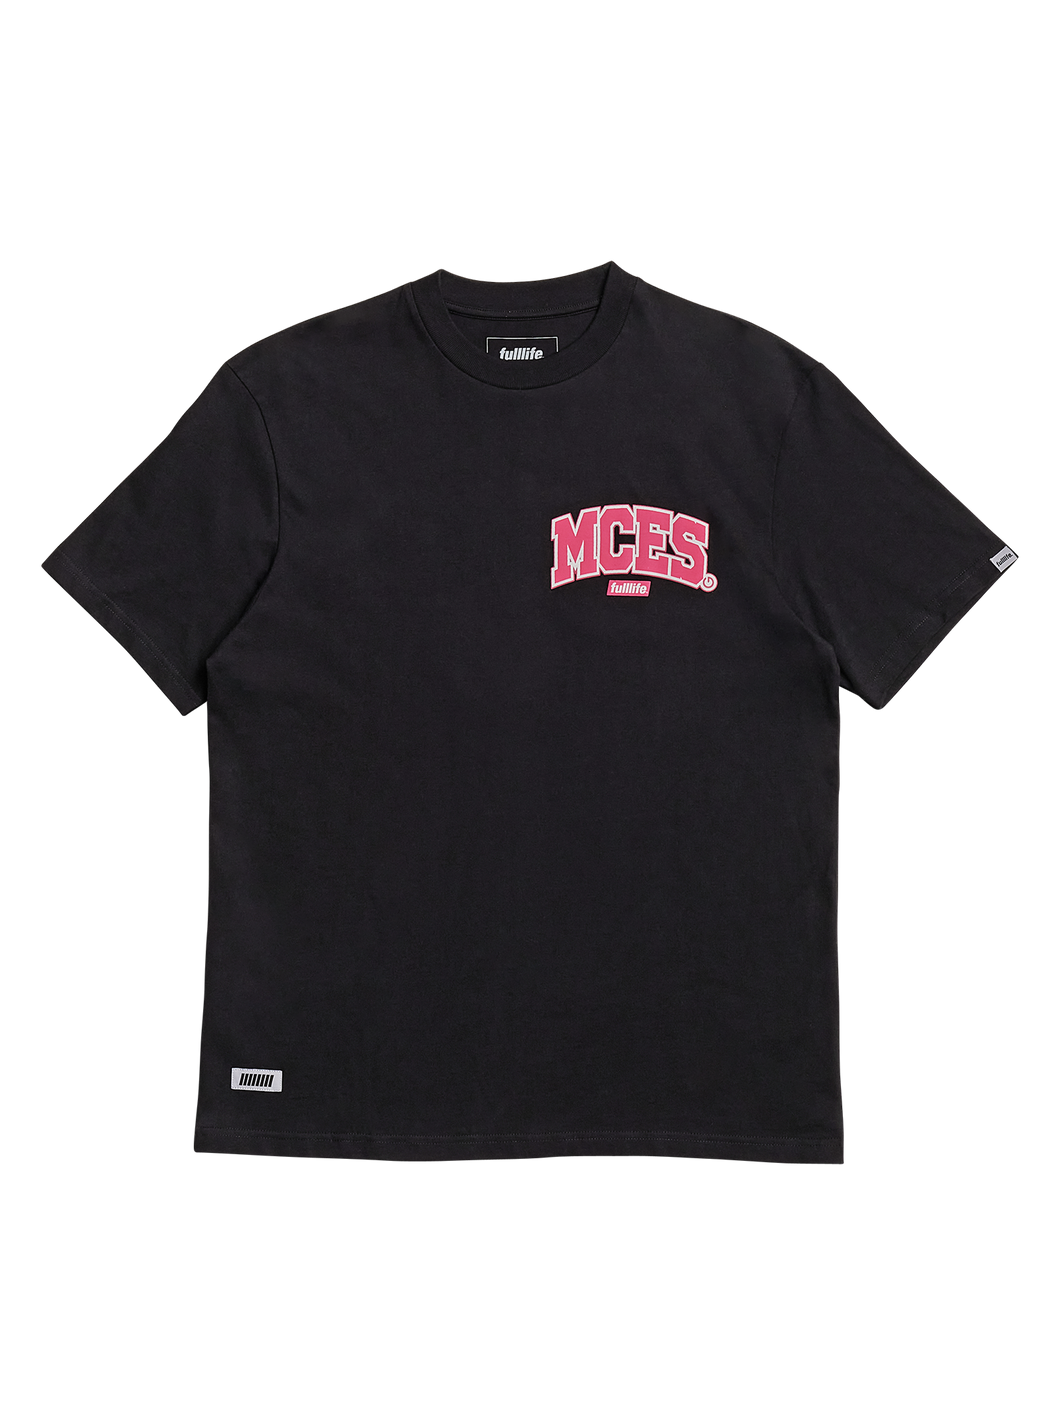 Fulllife x MCES Campus T-shirt Obsidian Black